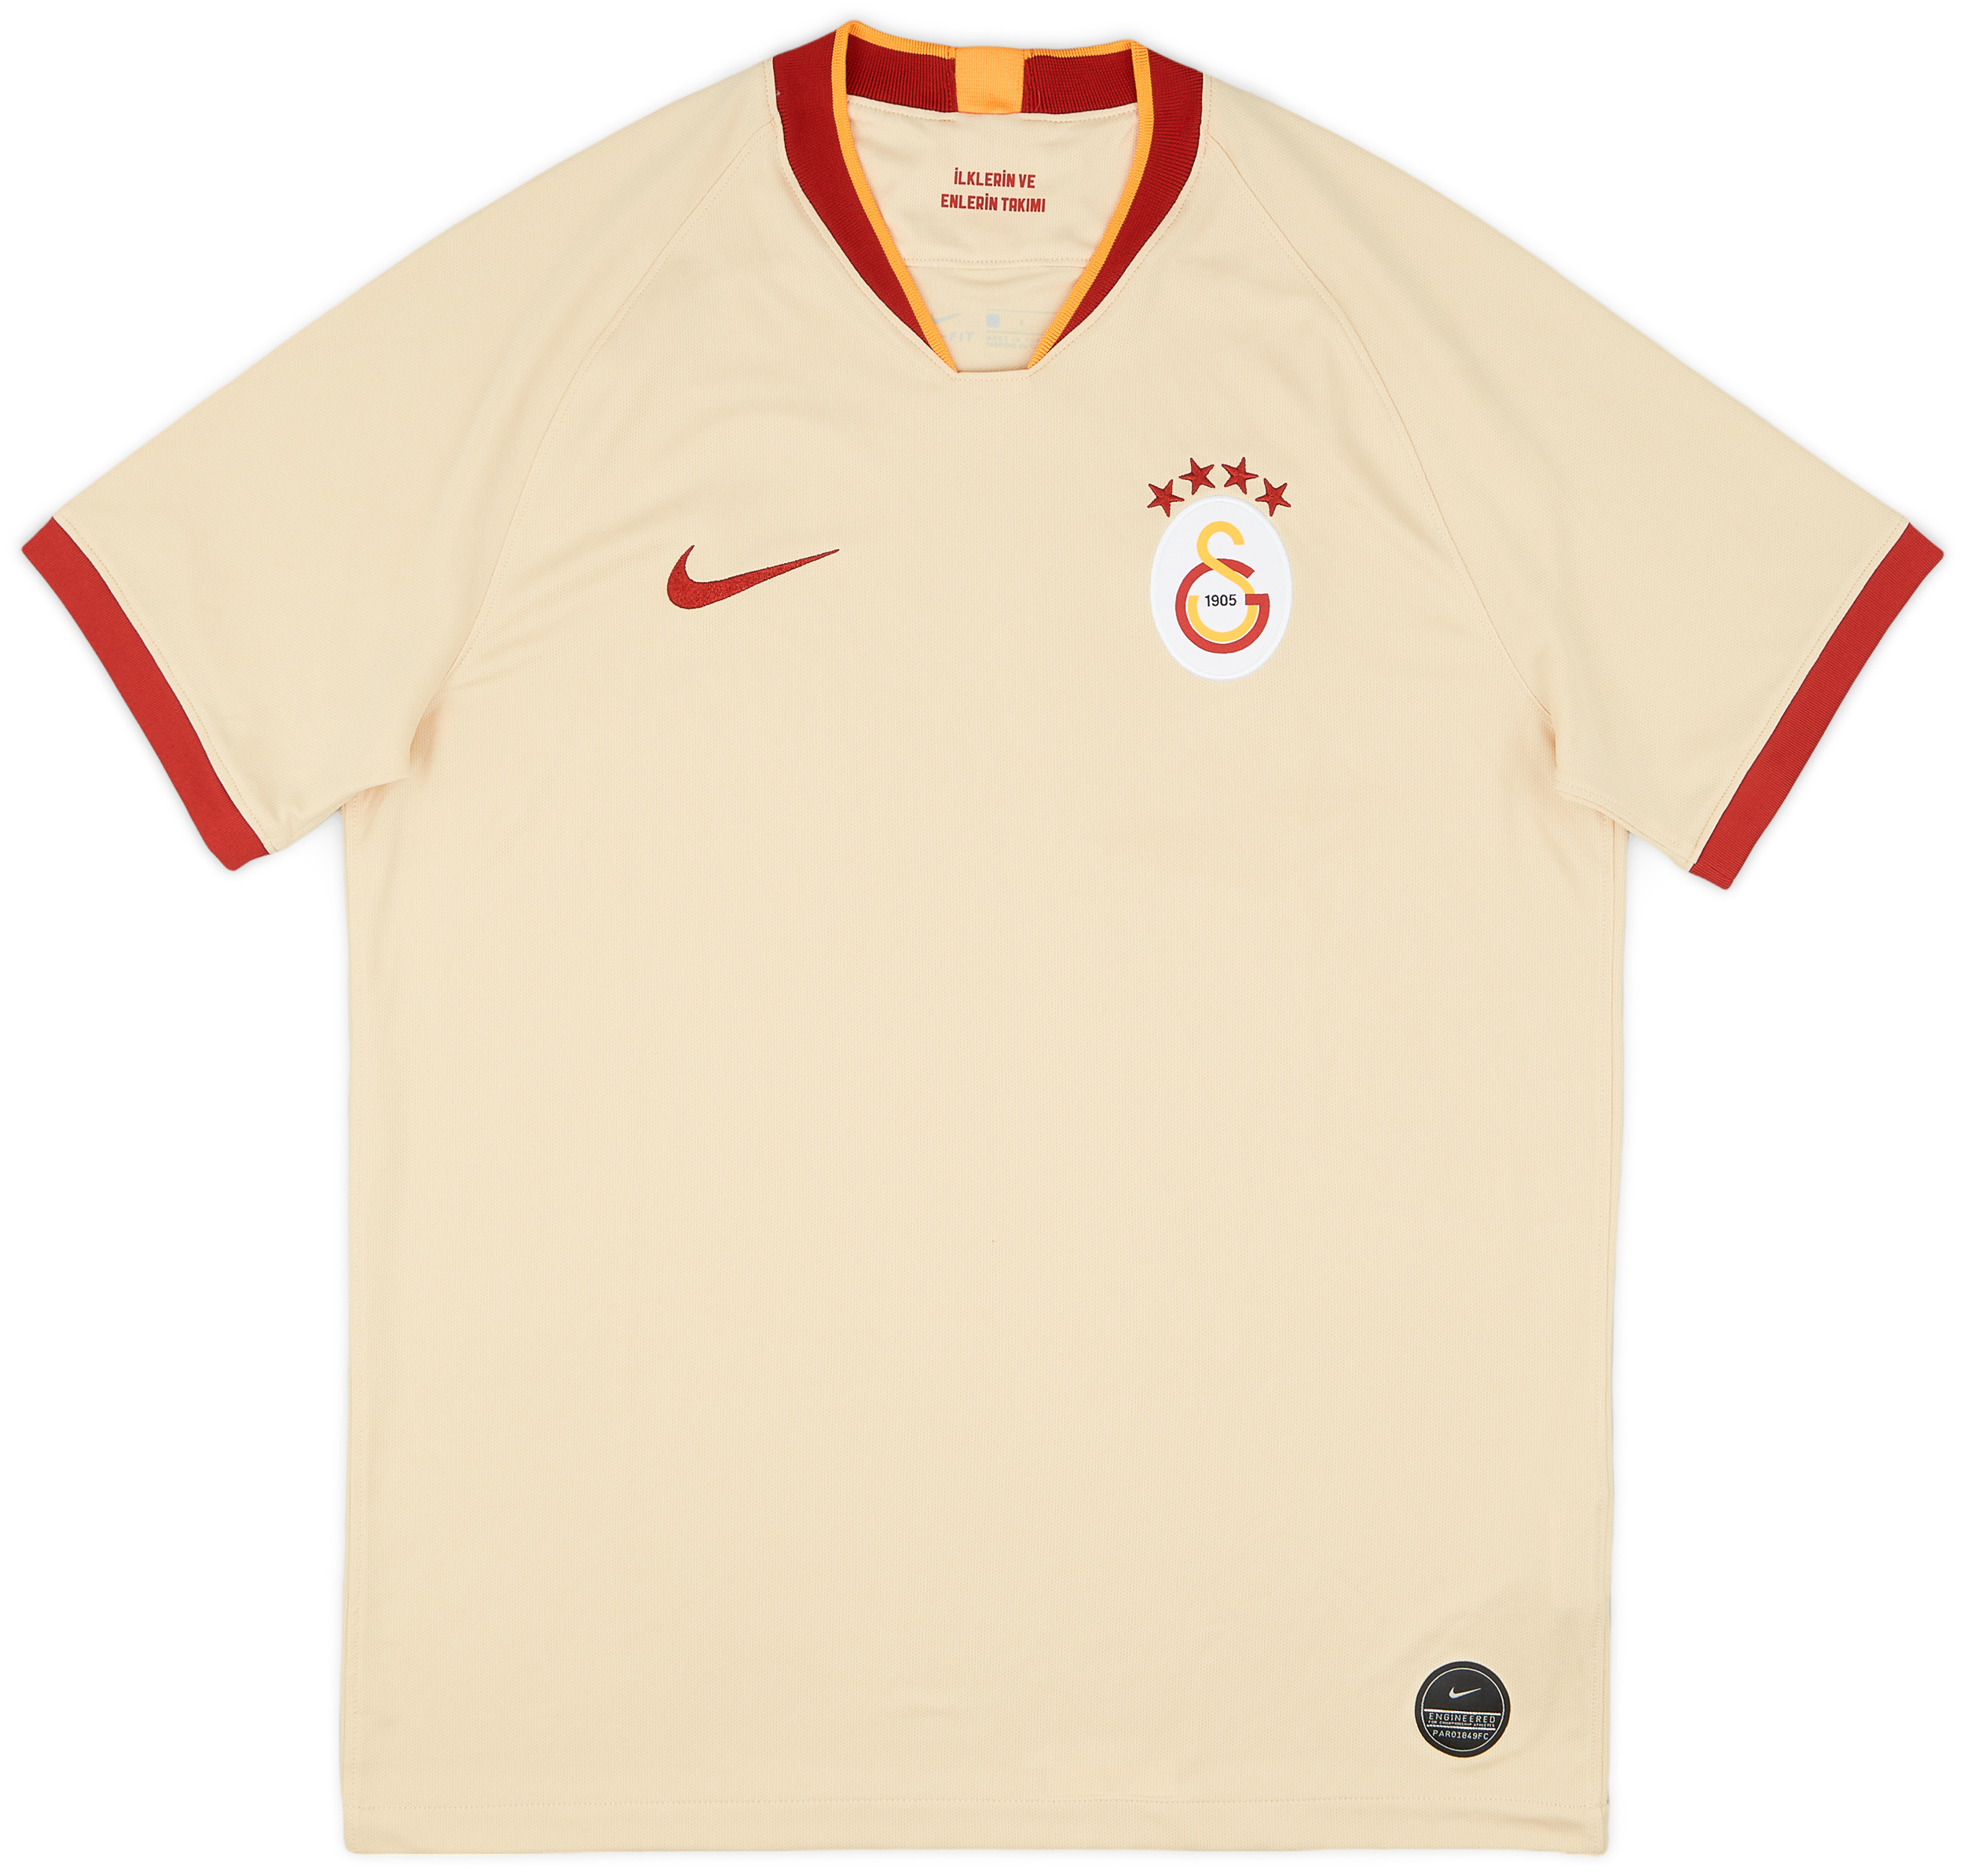 2019-20 Galatasaray Away Shirt - 9/10 - ()